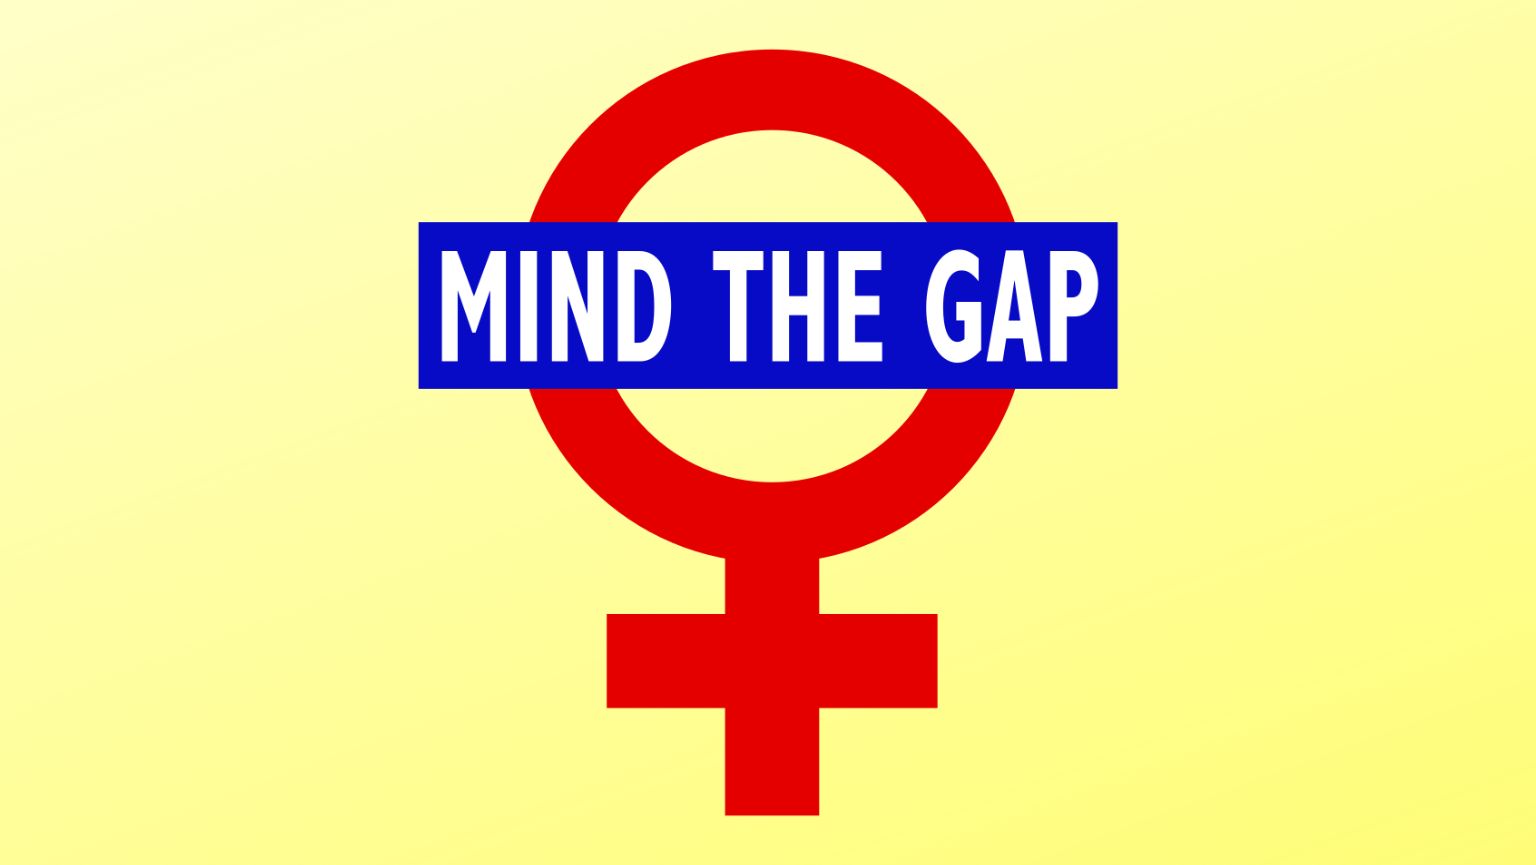 https://commons.wikimedia.org/wiki/File:Mind_the_gap1.jpg